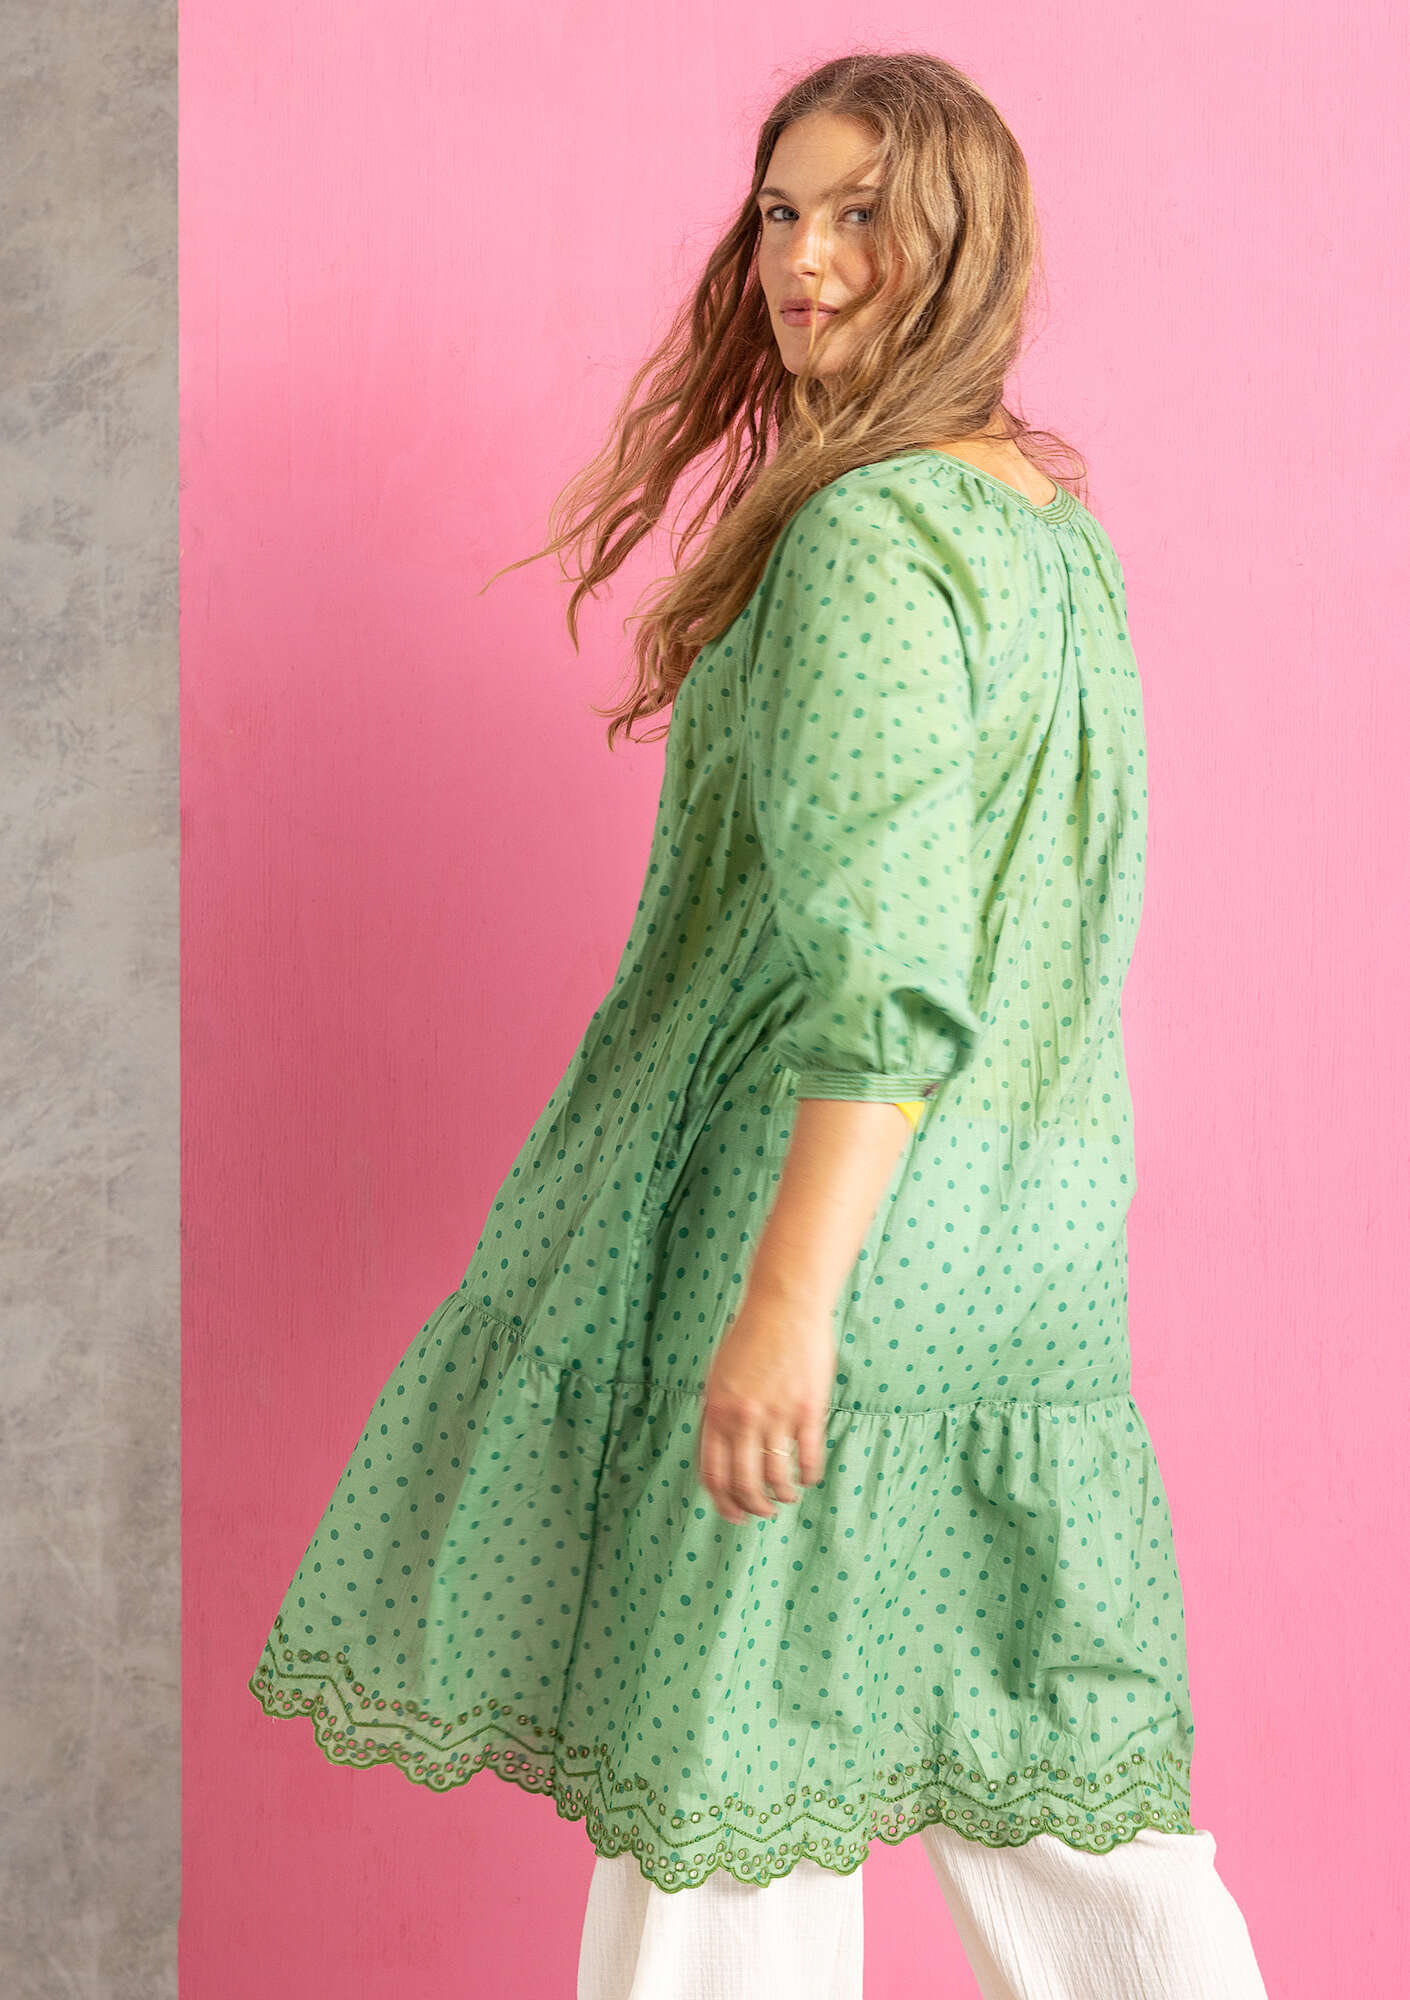 Woven dress in organic cotton dusty green